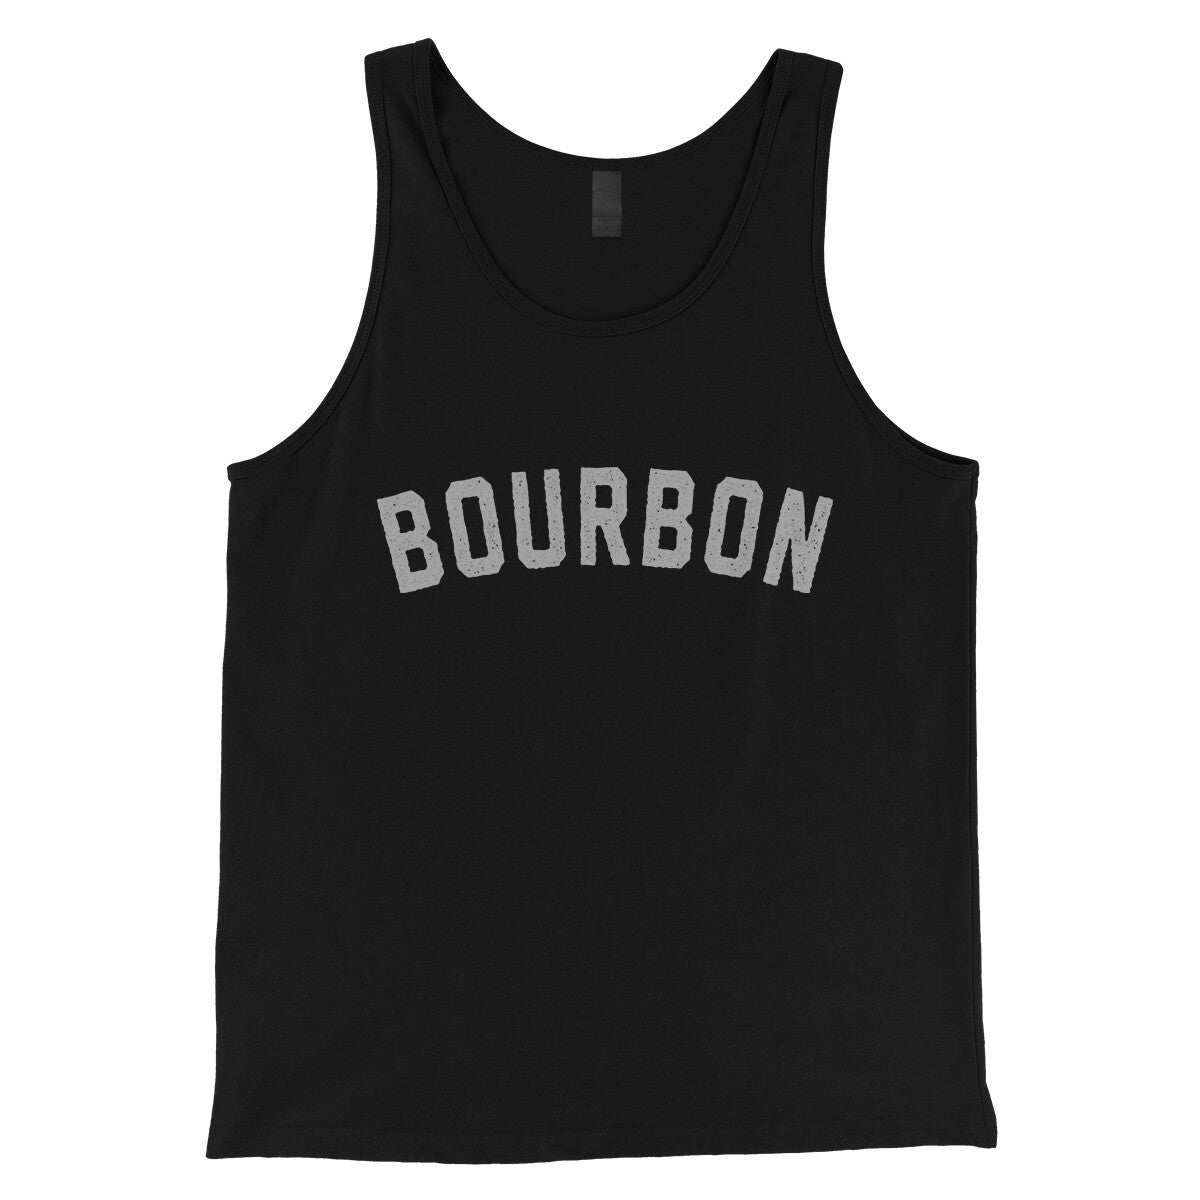 Bourbon in Black Color